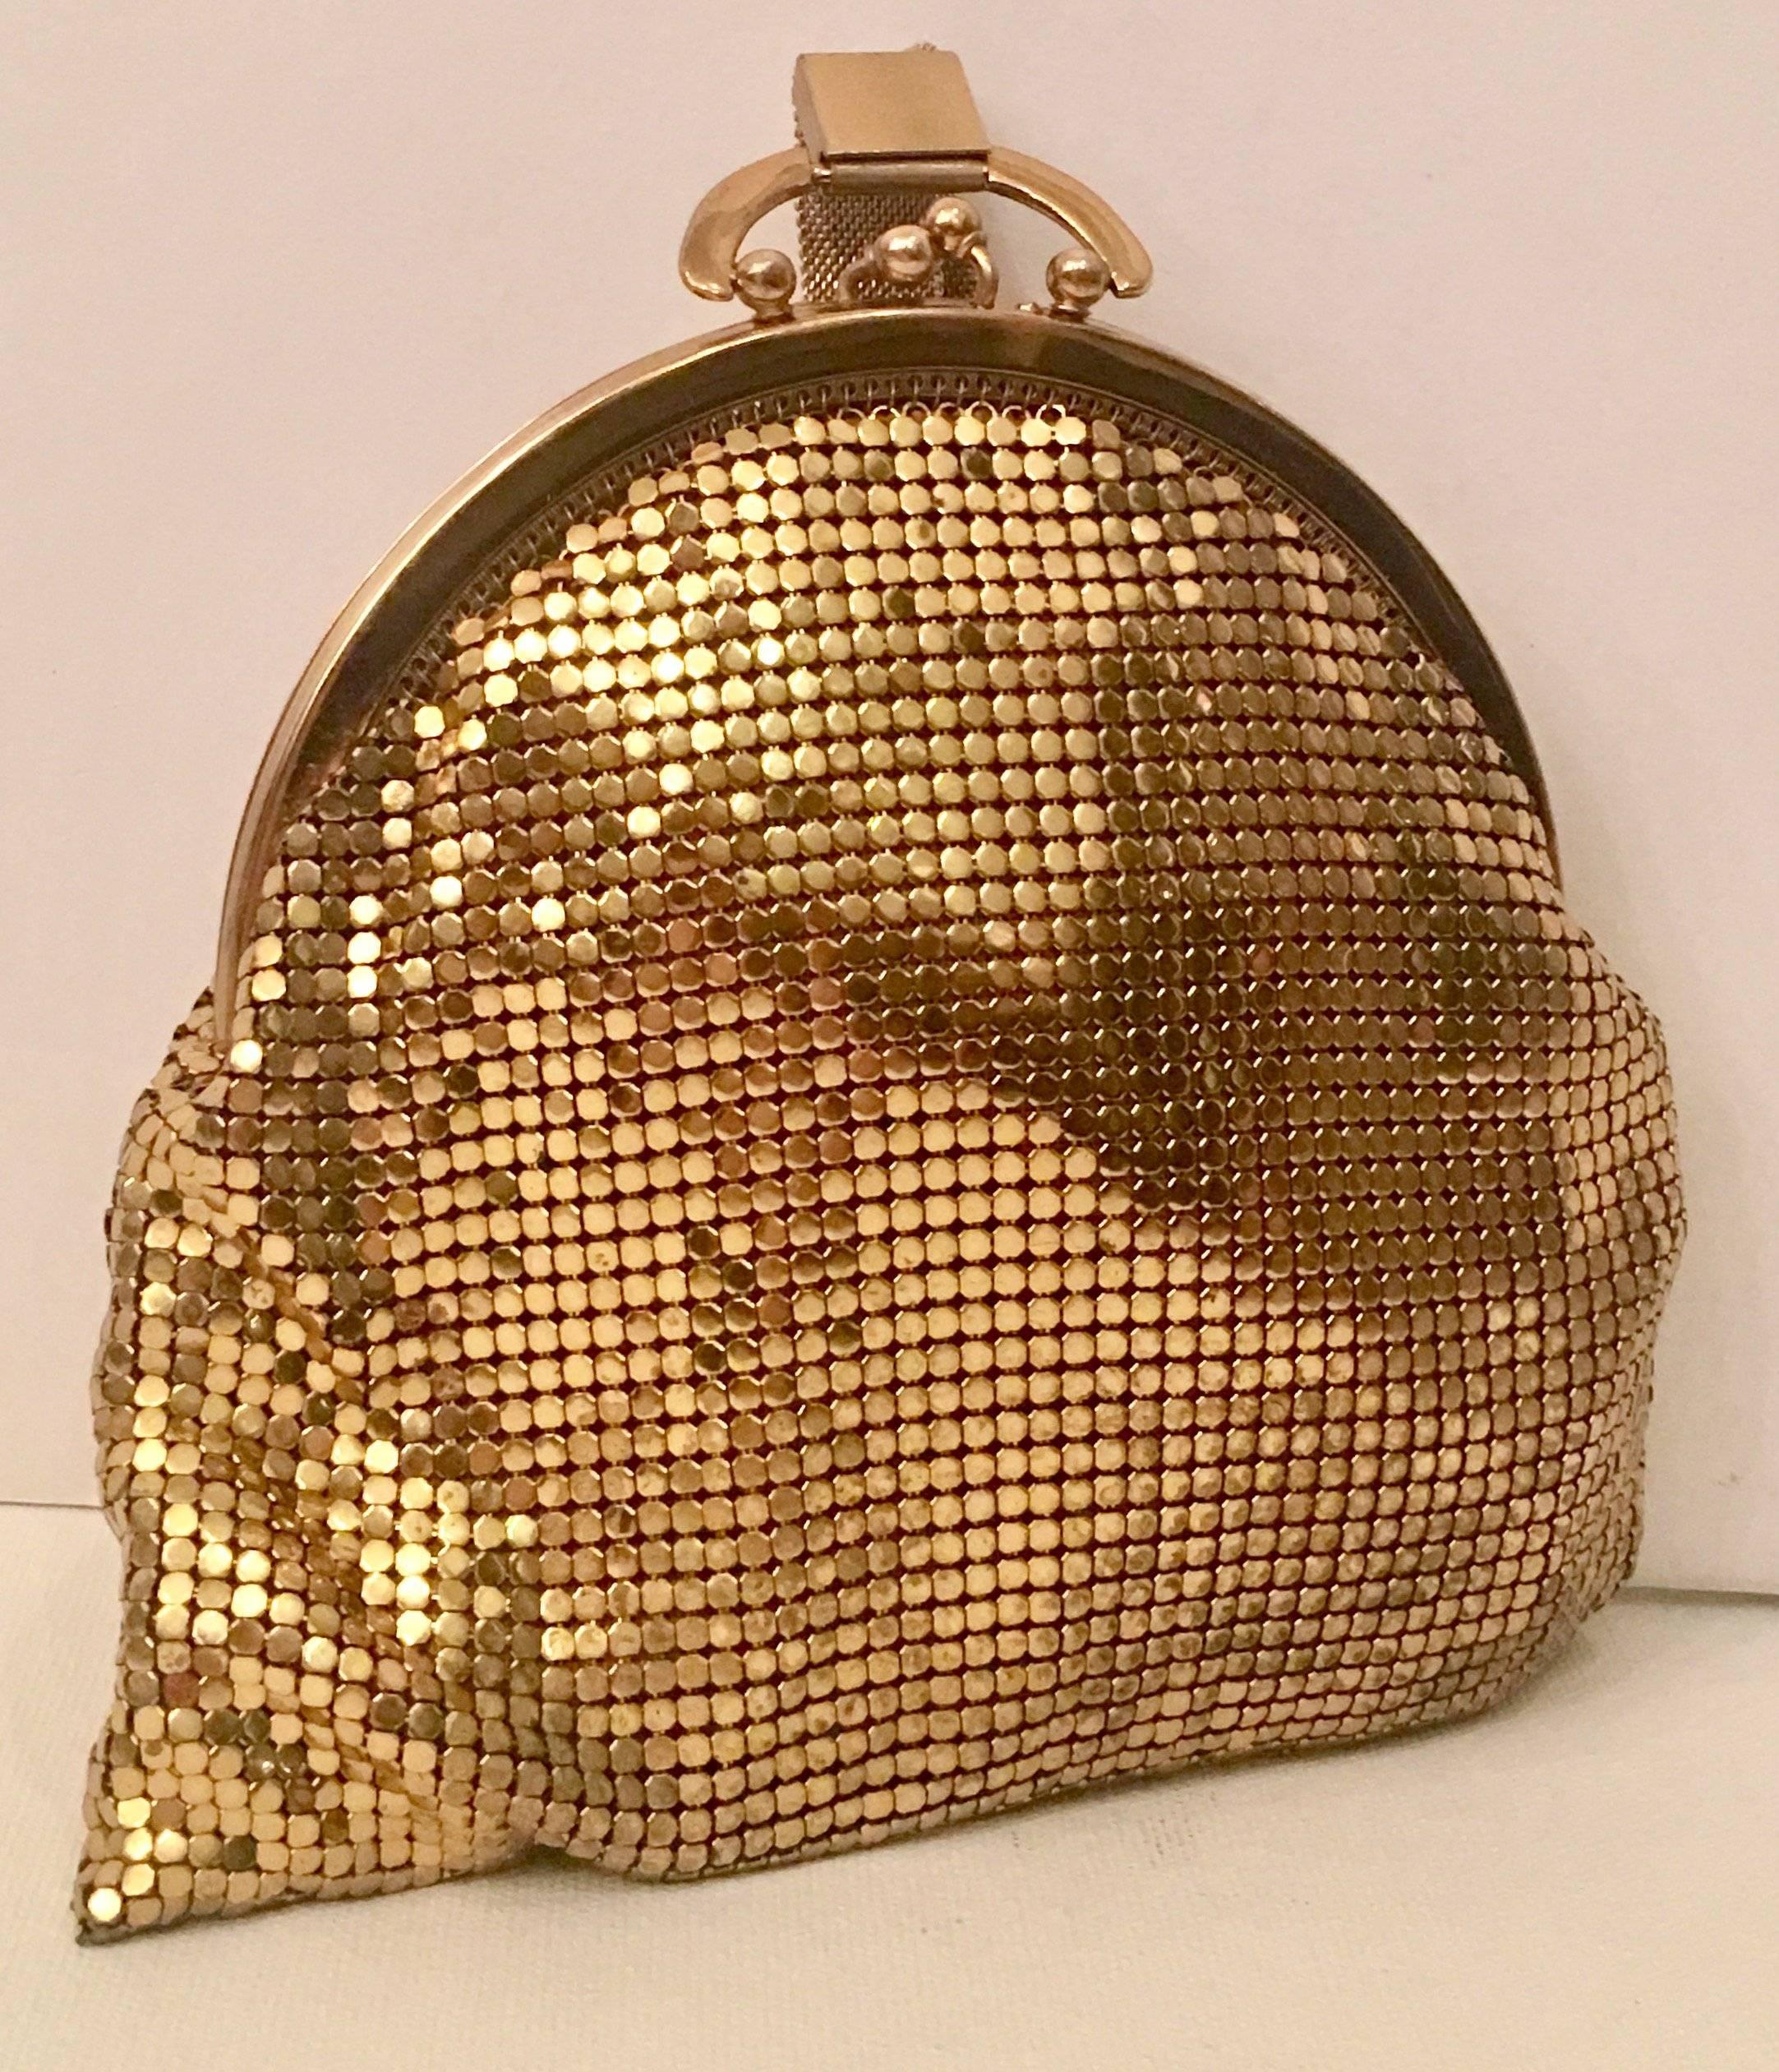 Whiting & Davis wristlet style gold metal mesh handbag. The interior Whiting & Davis manufacturing tag is intact.